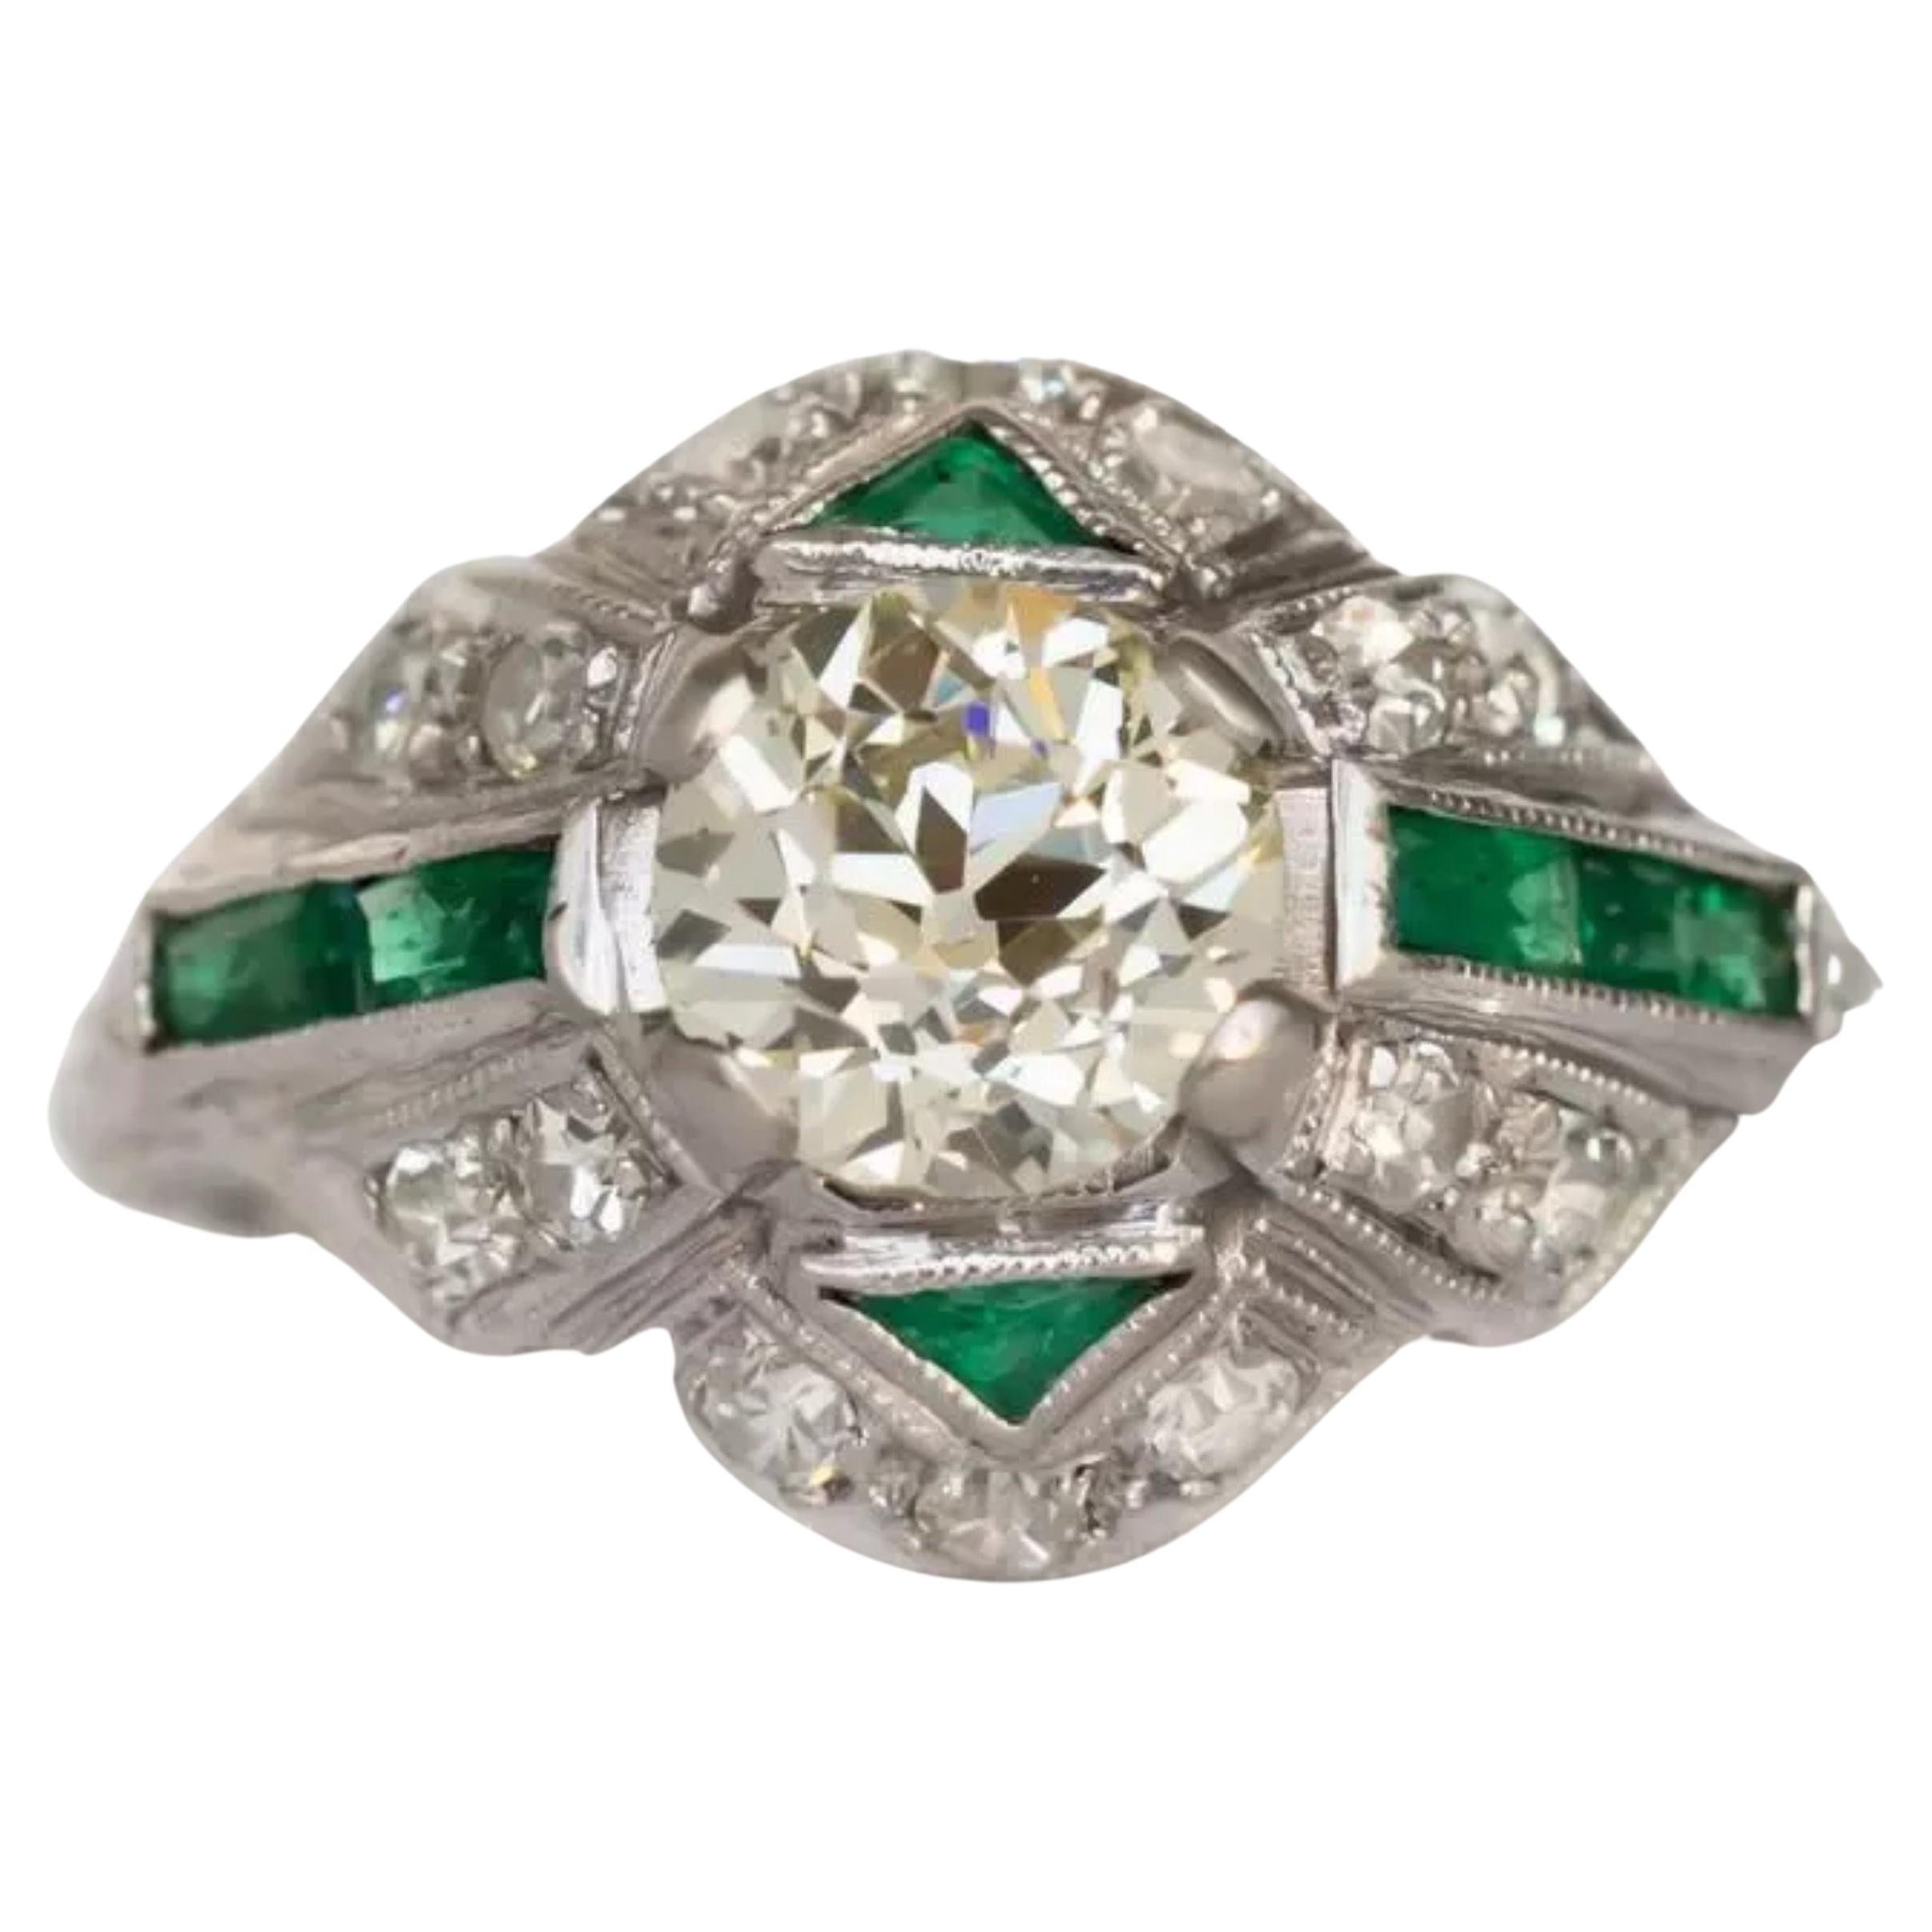 For Sale:  3 Carat Natural Diamond Emerald Engagement Ring, Vintage Diamond Wedding Band